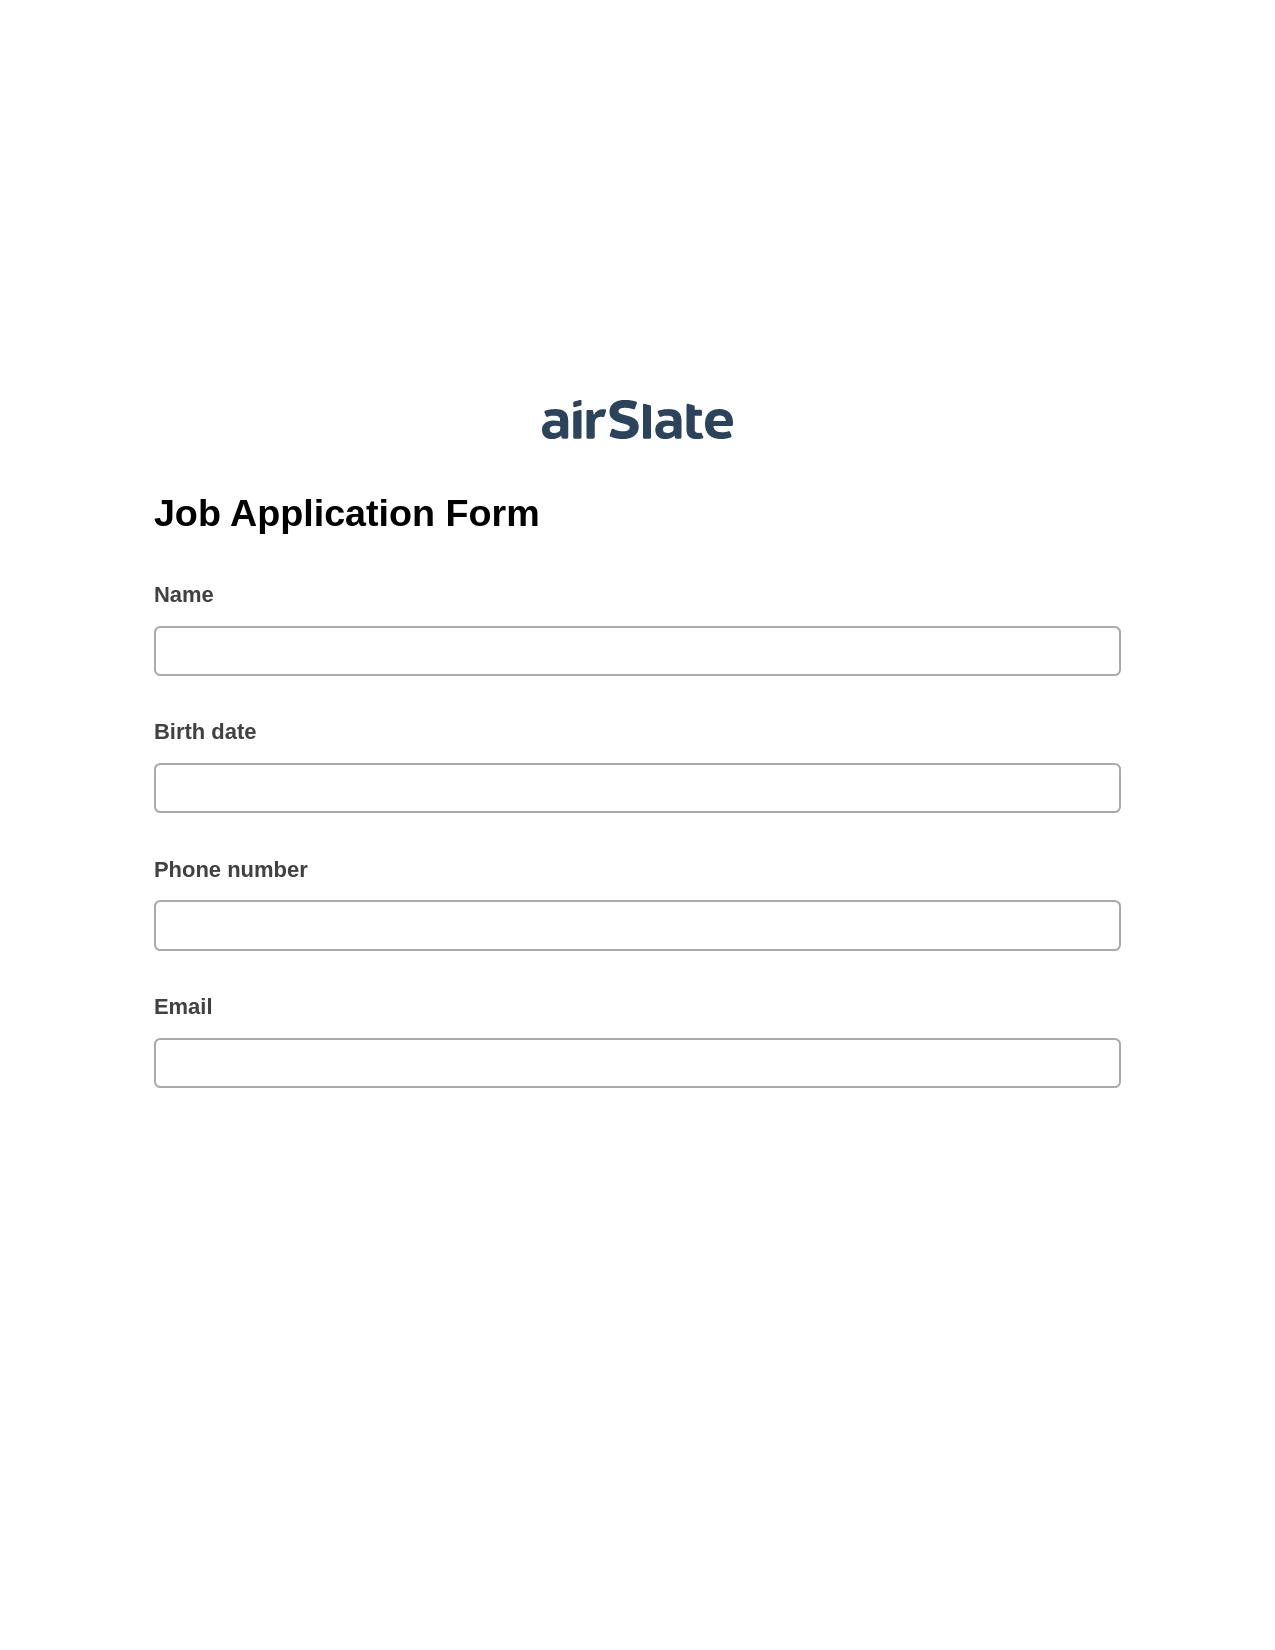 Job Application Form Pre-fill from MySQL Dropdown Options Bot, Create slate addon, Webhook Postfinish Bot